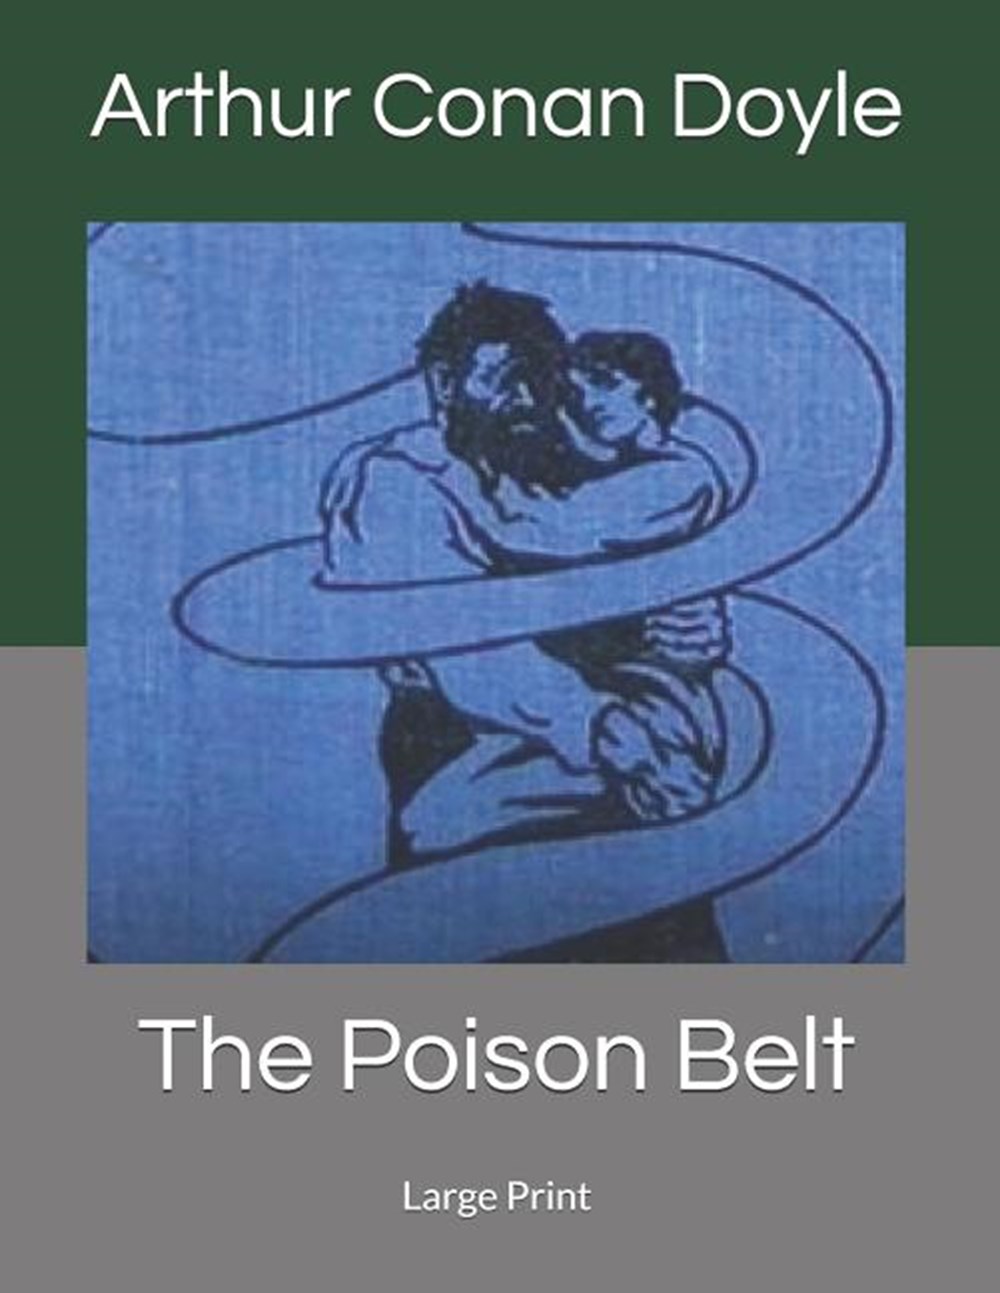 Poison Belt Large Print